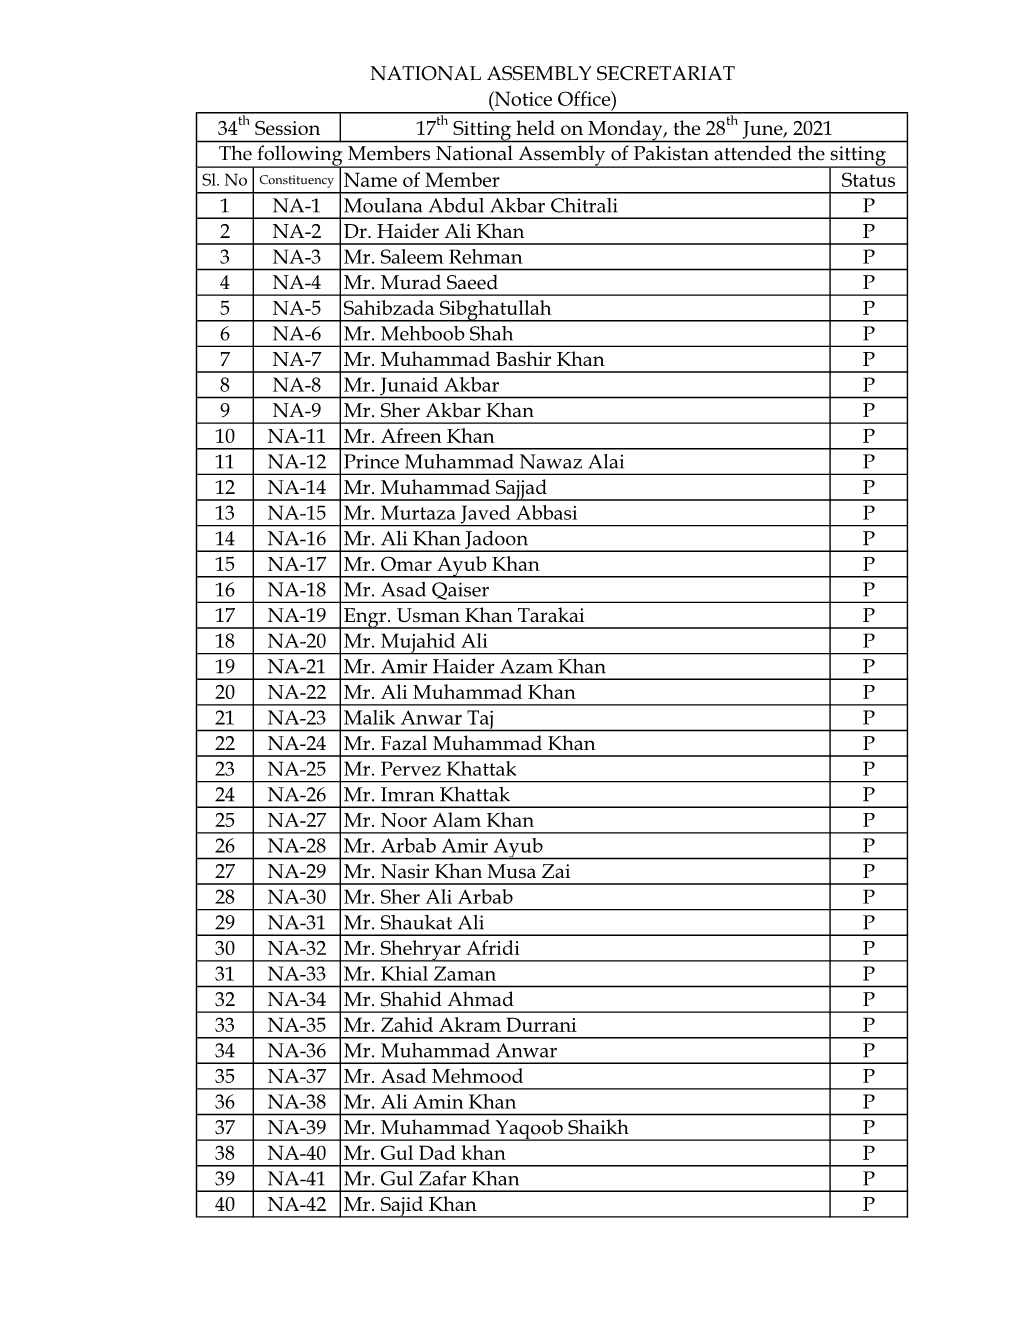 Sl. No Constituency Name of Member Status 1 NA-1 Moulana Abdul Akbar Chitrali P 2 NA-2 Dr